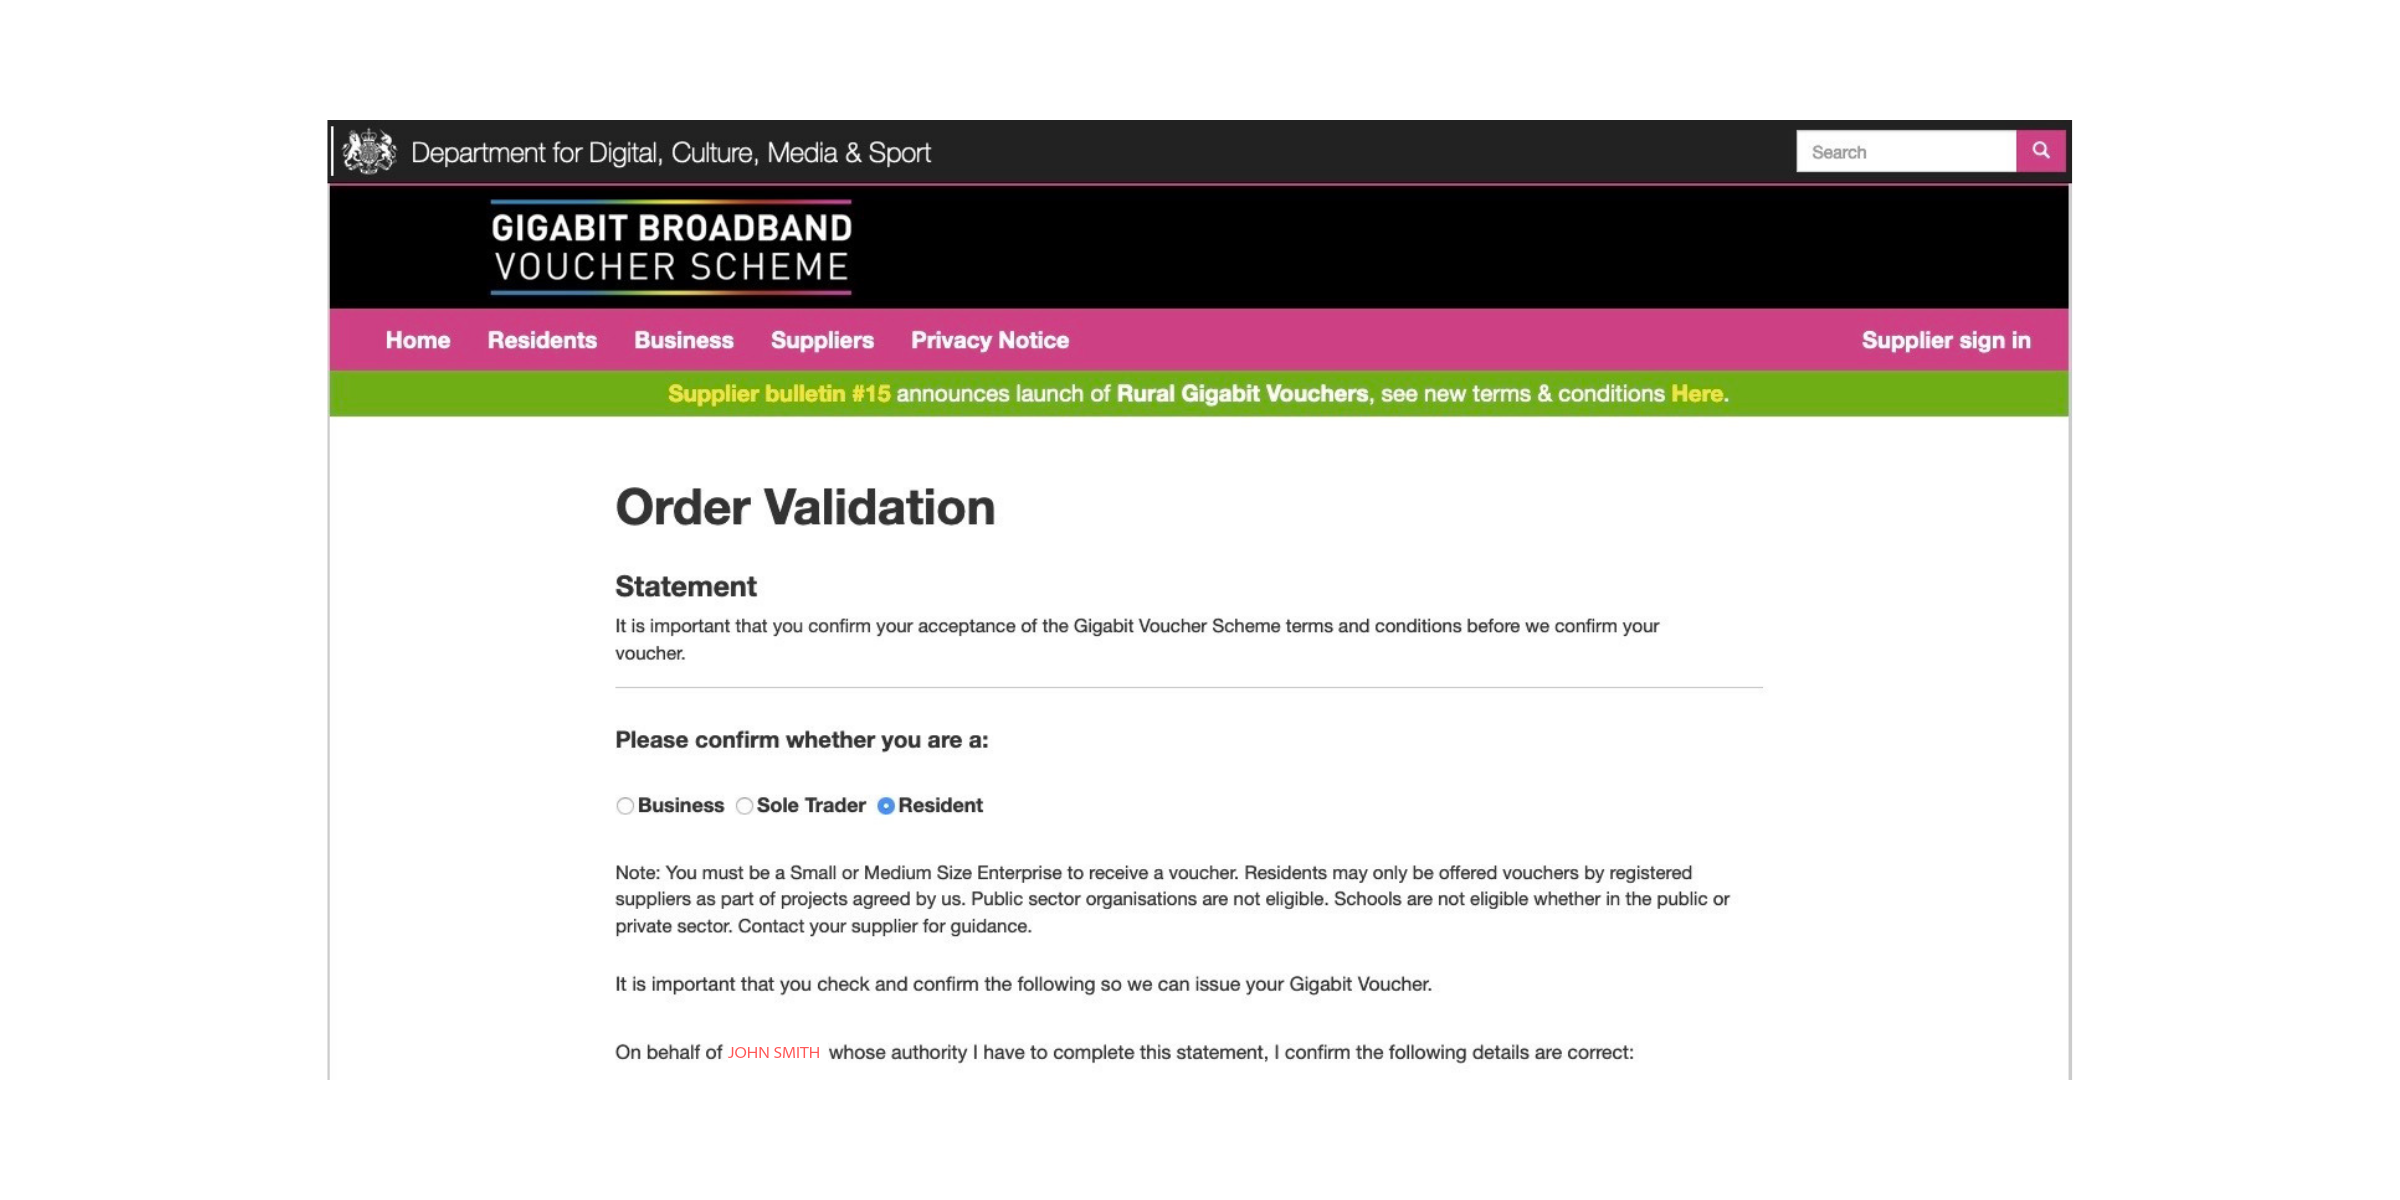 An example of a Resident application for the Gigabit Broadband Voucher Scheme